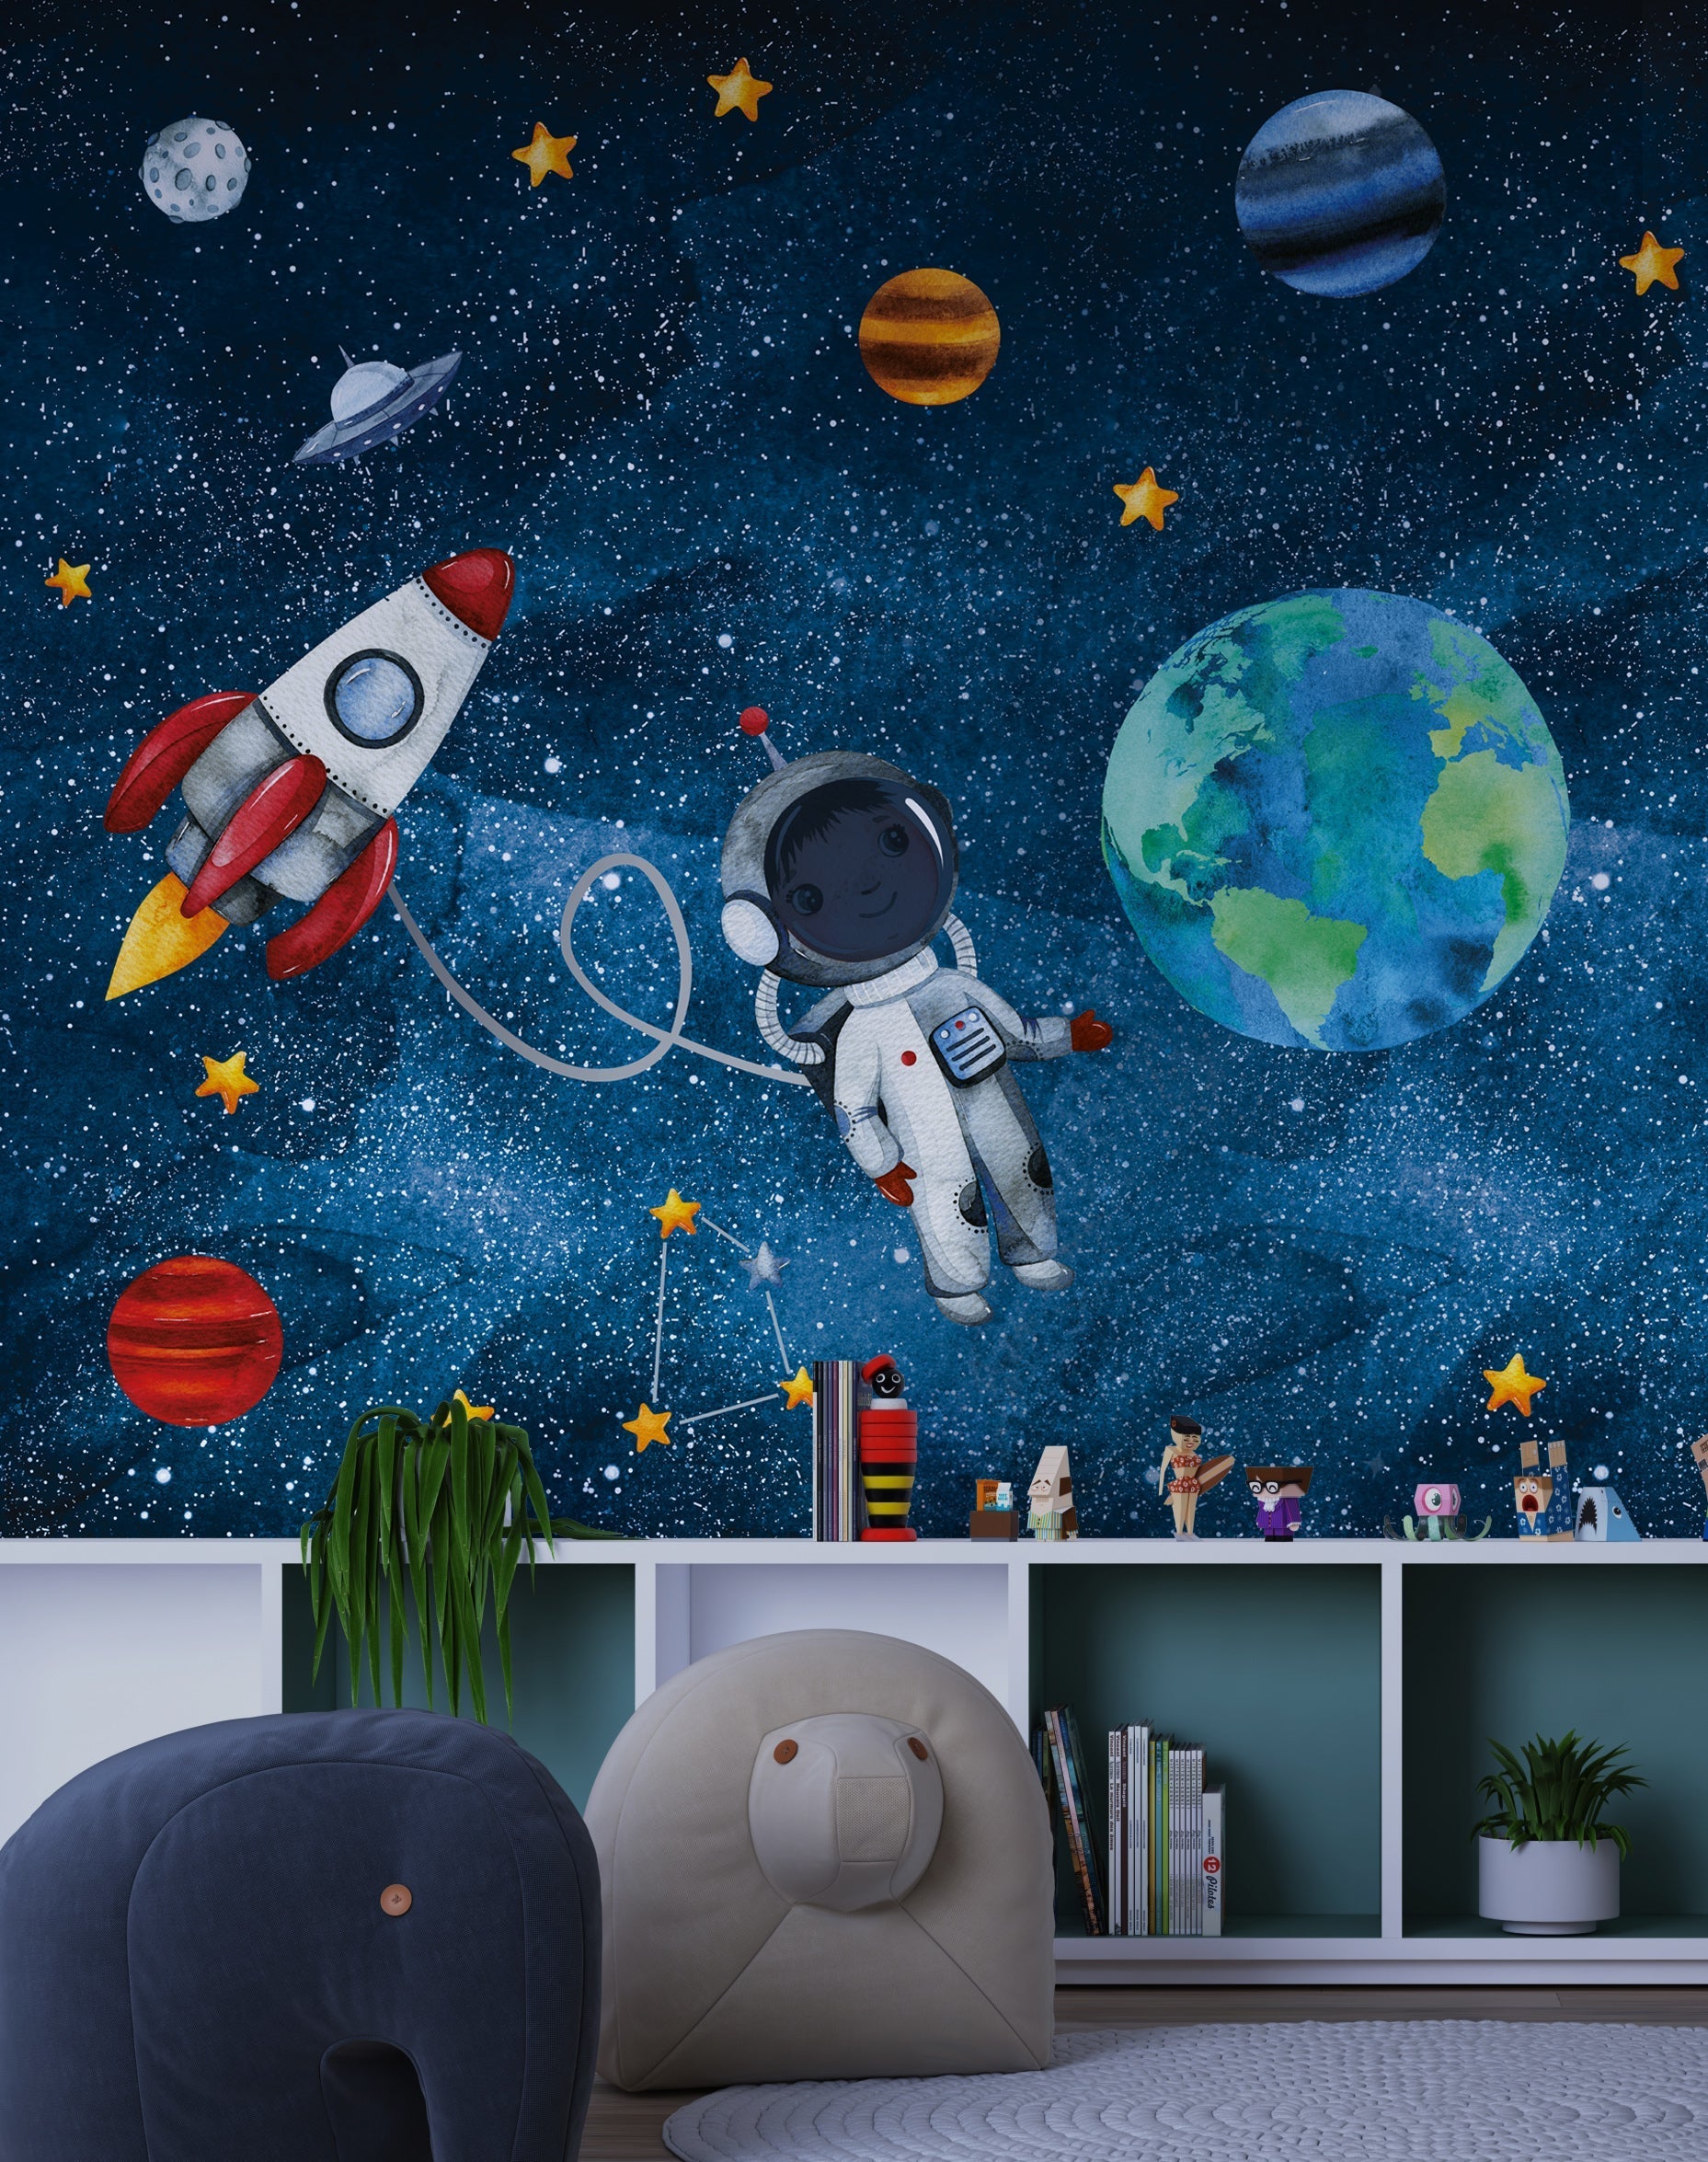 Kids Room Wallpaper Mural: Explore Space with Astronaut-GraffitiWallArt